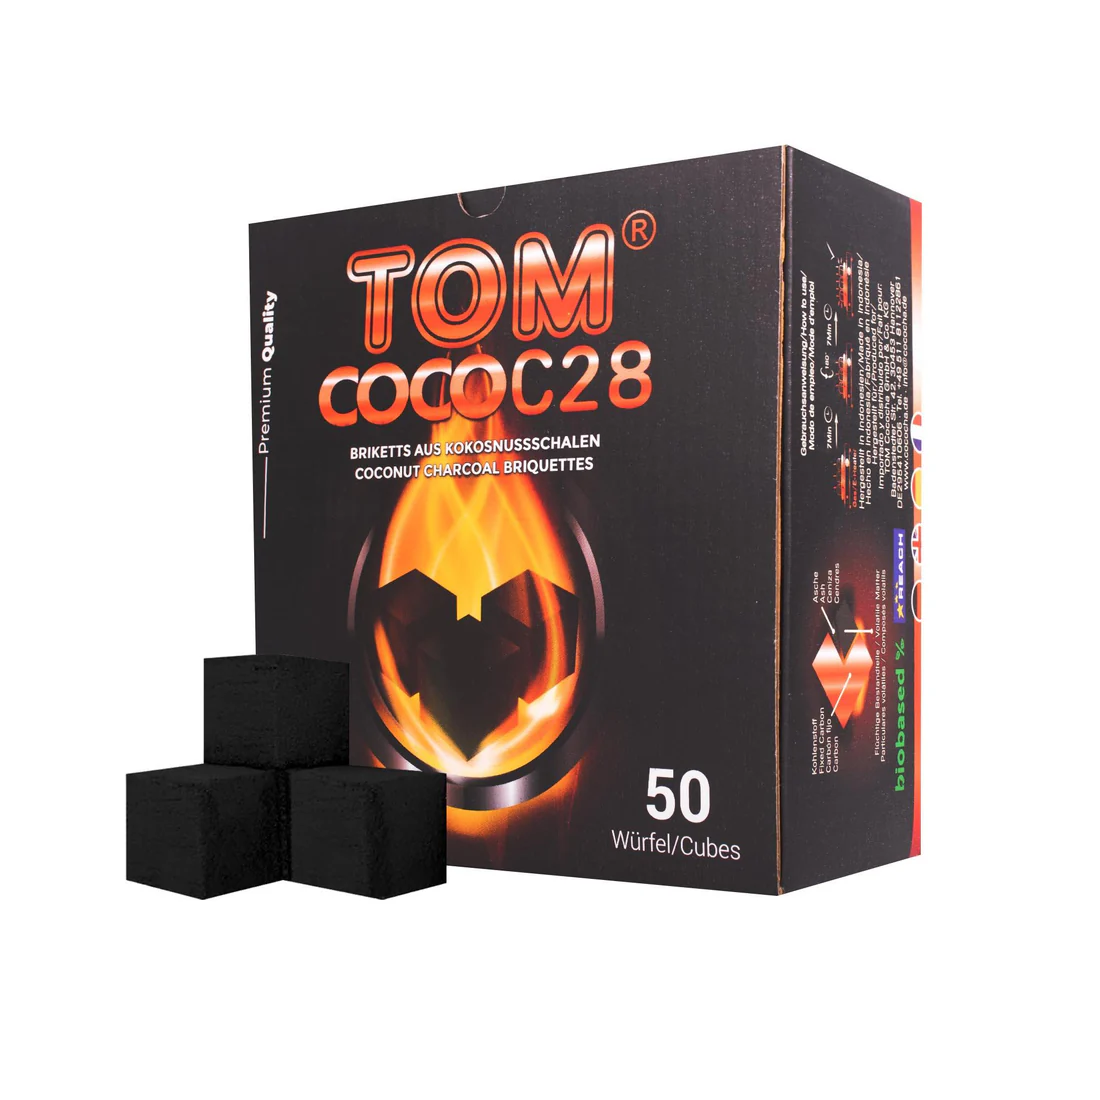 TOM Coco C28 - 1 Kilogramm